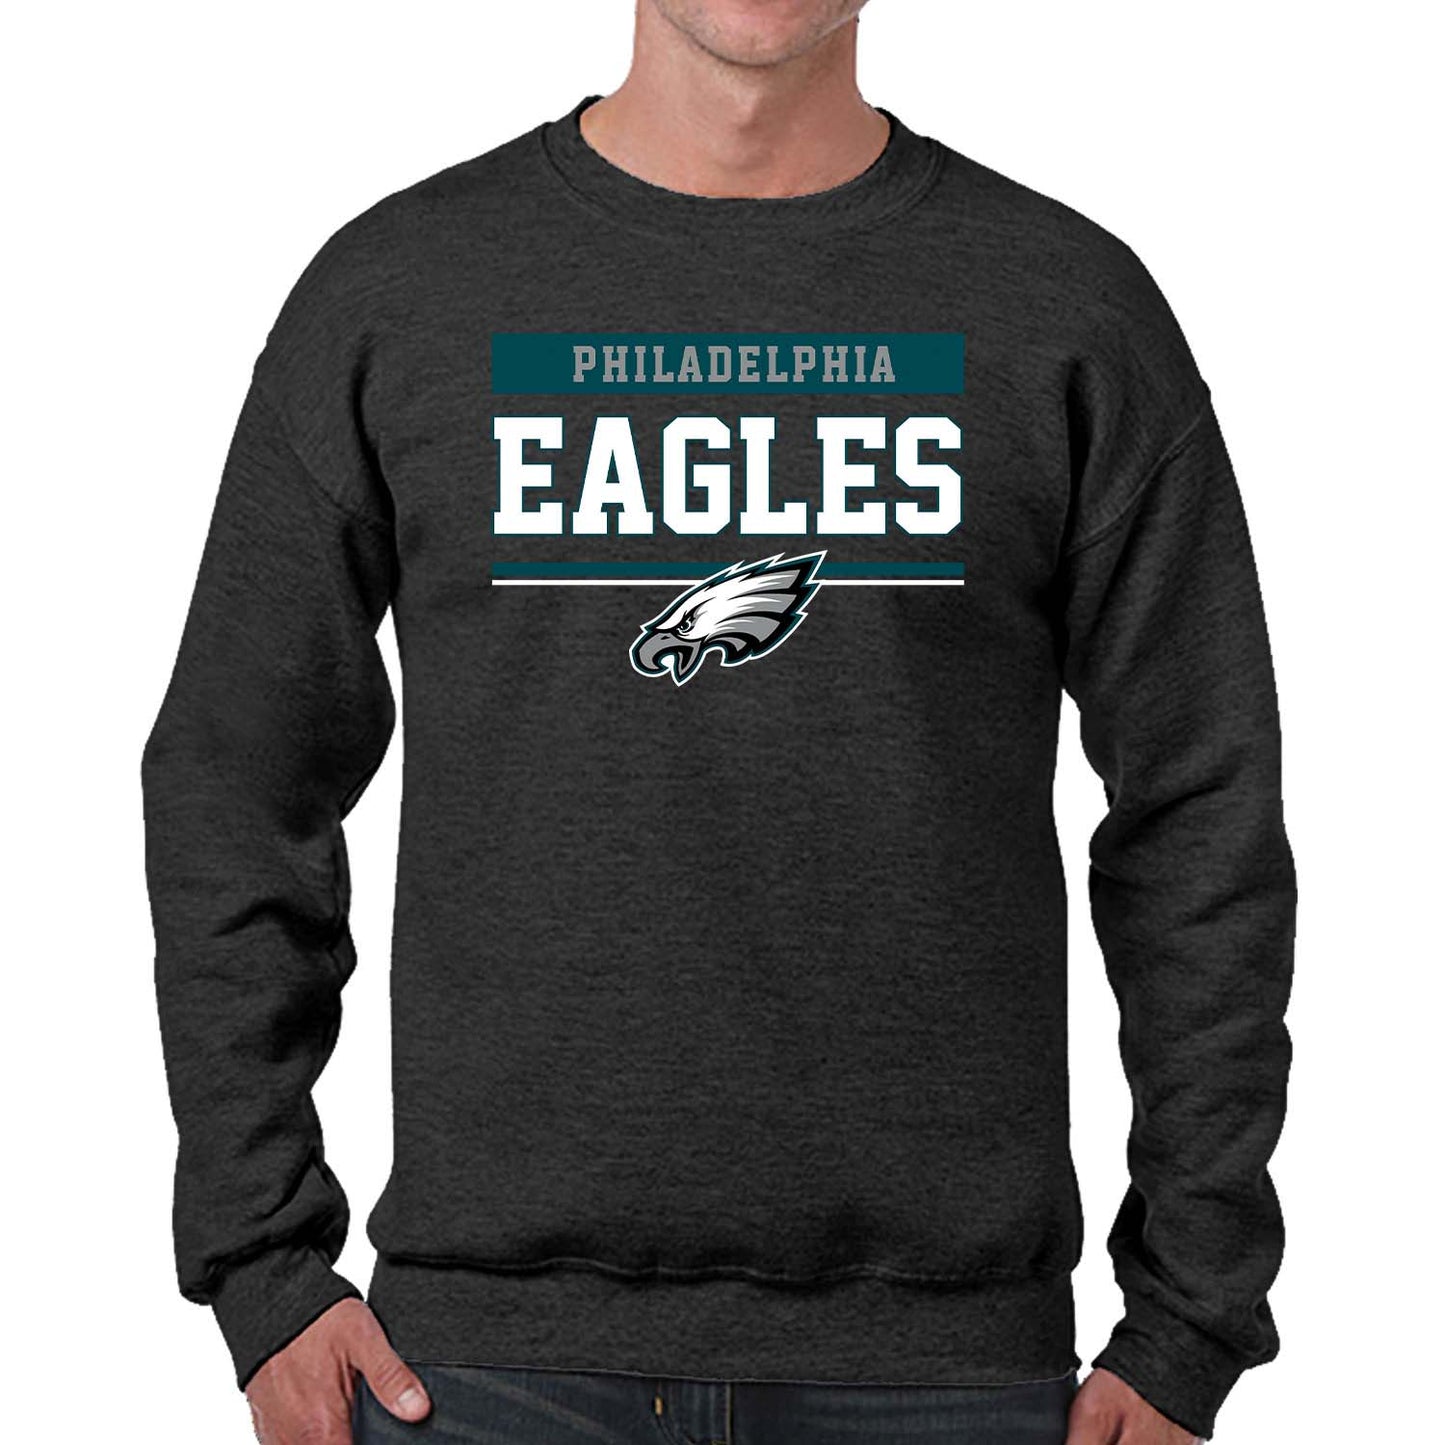 Philadelphia Eagles NFL Adult Long Sleeve Team Block Charcoal Crewneck Sweatshirt - Charcoal